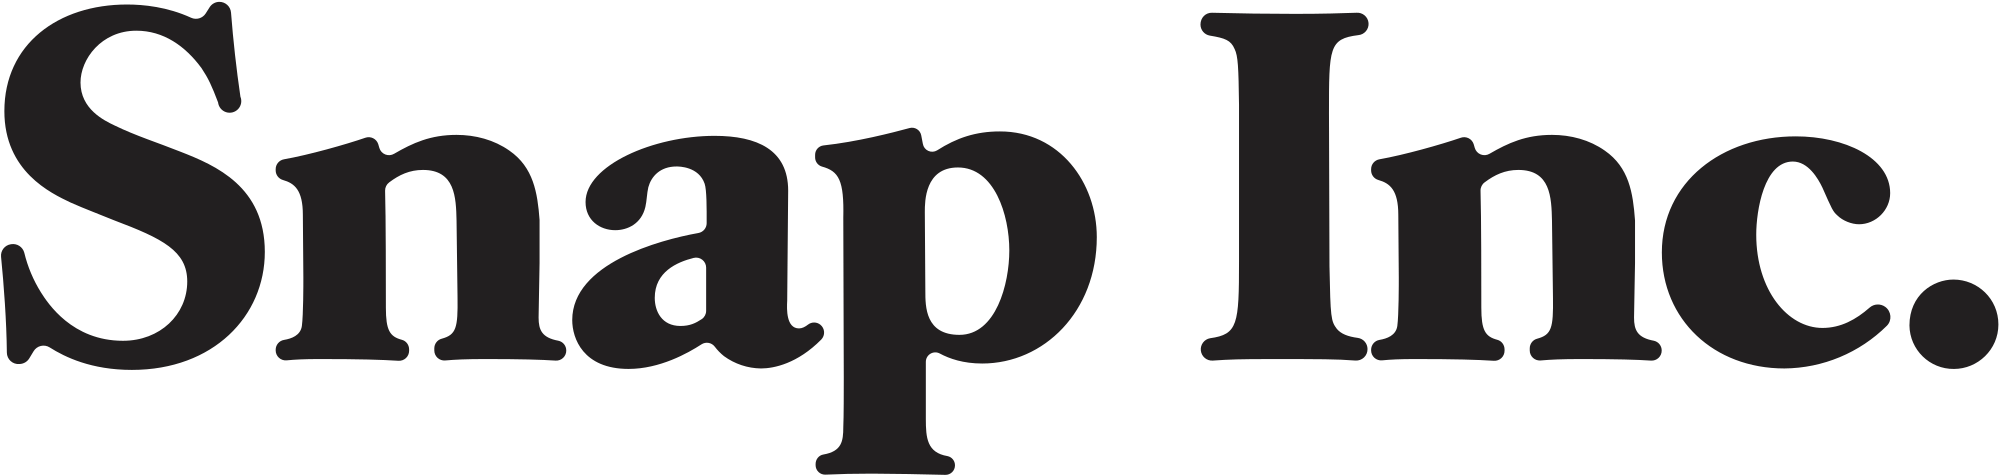 Chooses Utah For Future Expansion - Snap Inc Logo Png (2000x494)